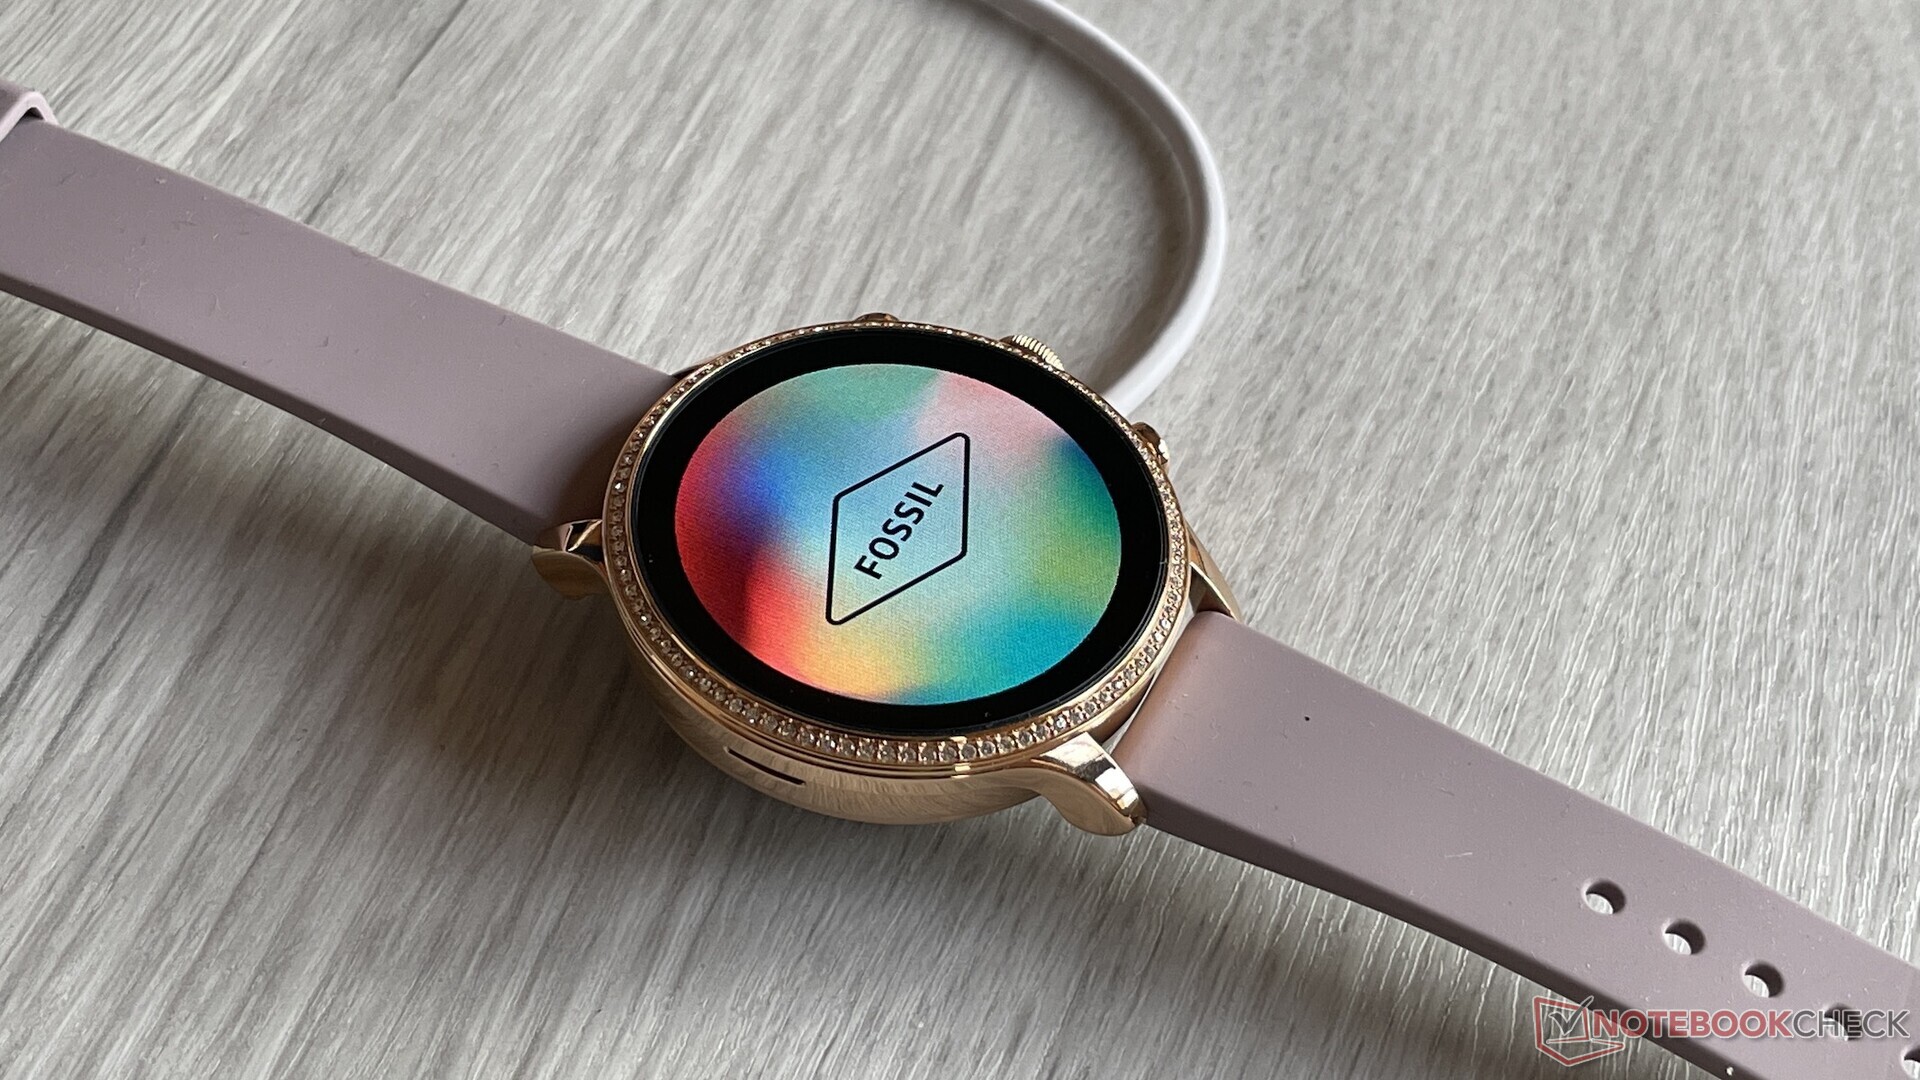 Fossil Gen 6 smartwatches gain Google Assistant support via new Wear OS 3  update -  News